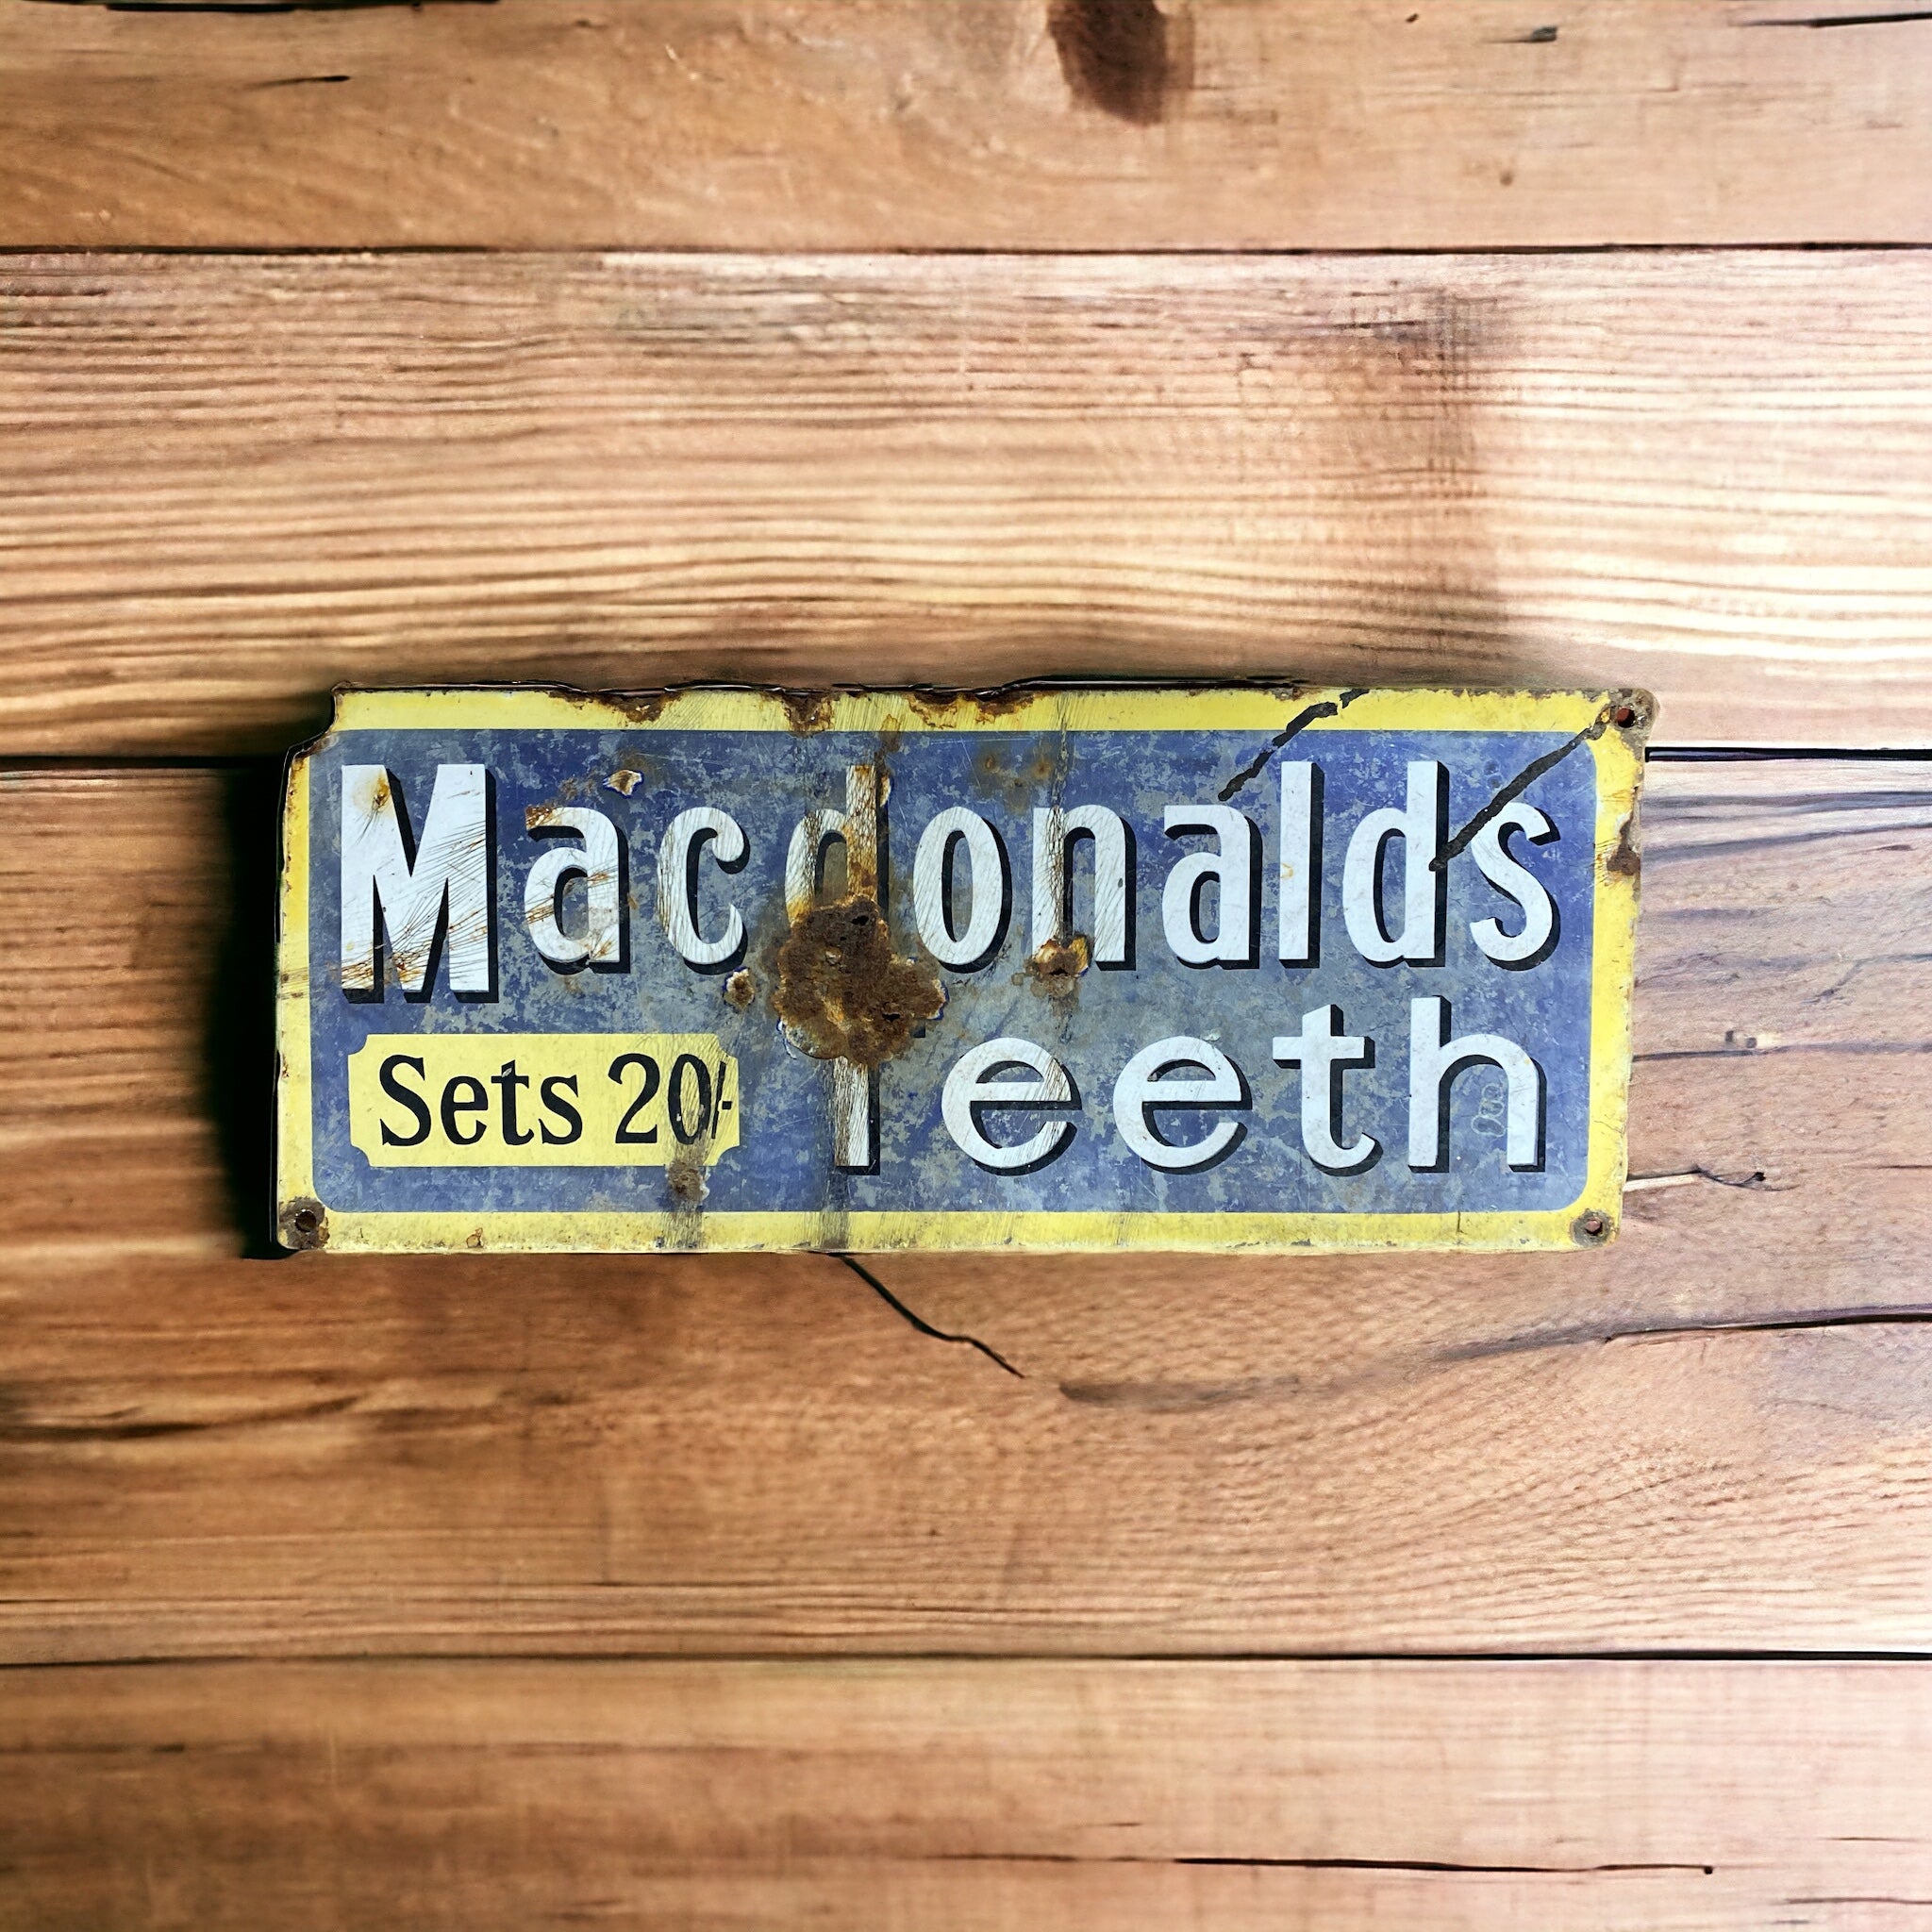 Wall Hung Vintage Enamel Signage Macdonalds Teeth Sets 20